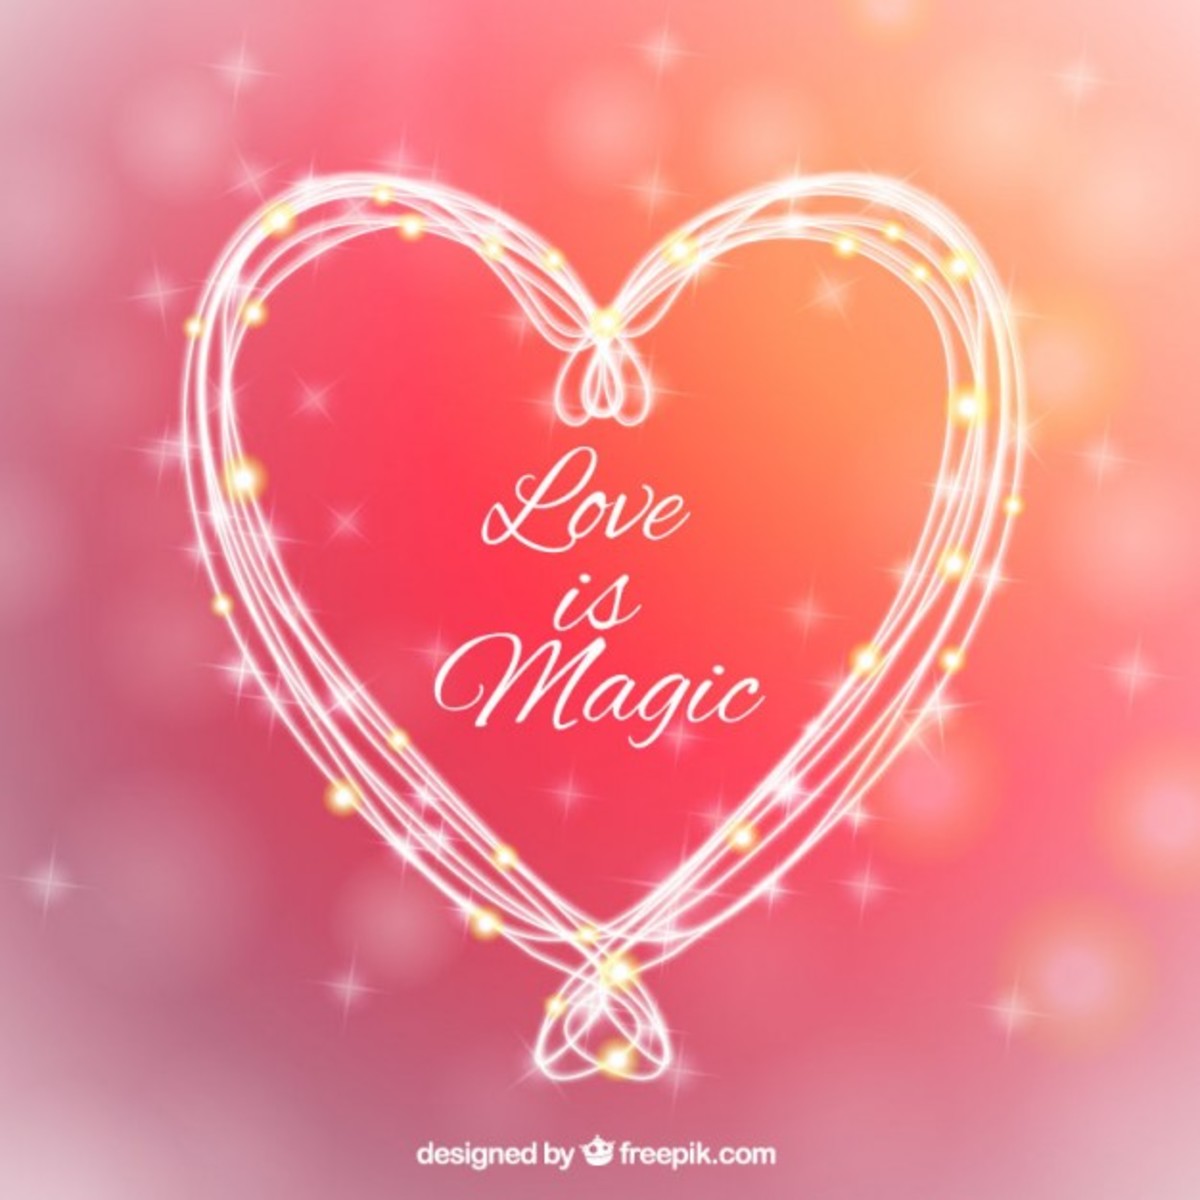 Love Magic and Spells